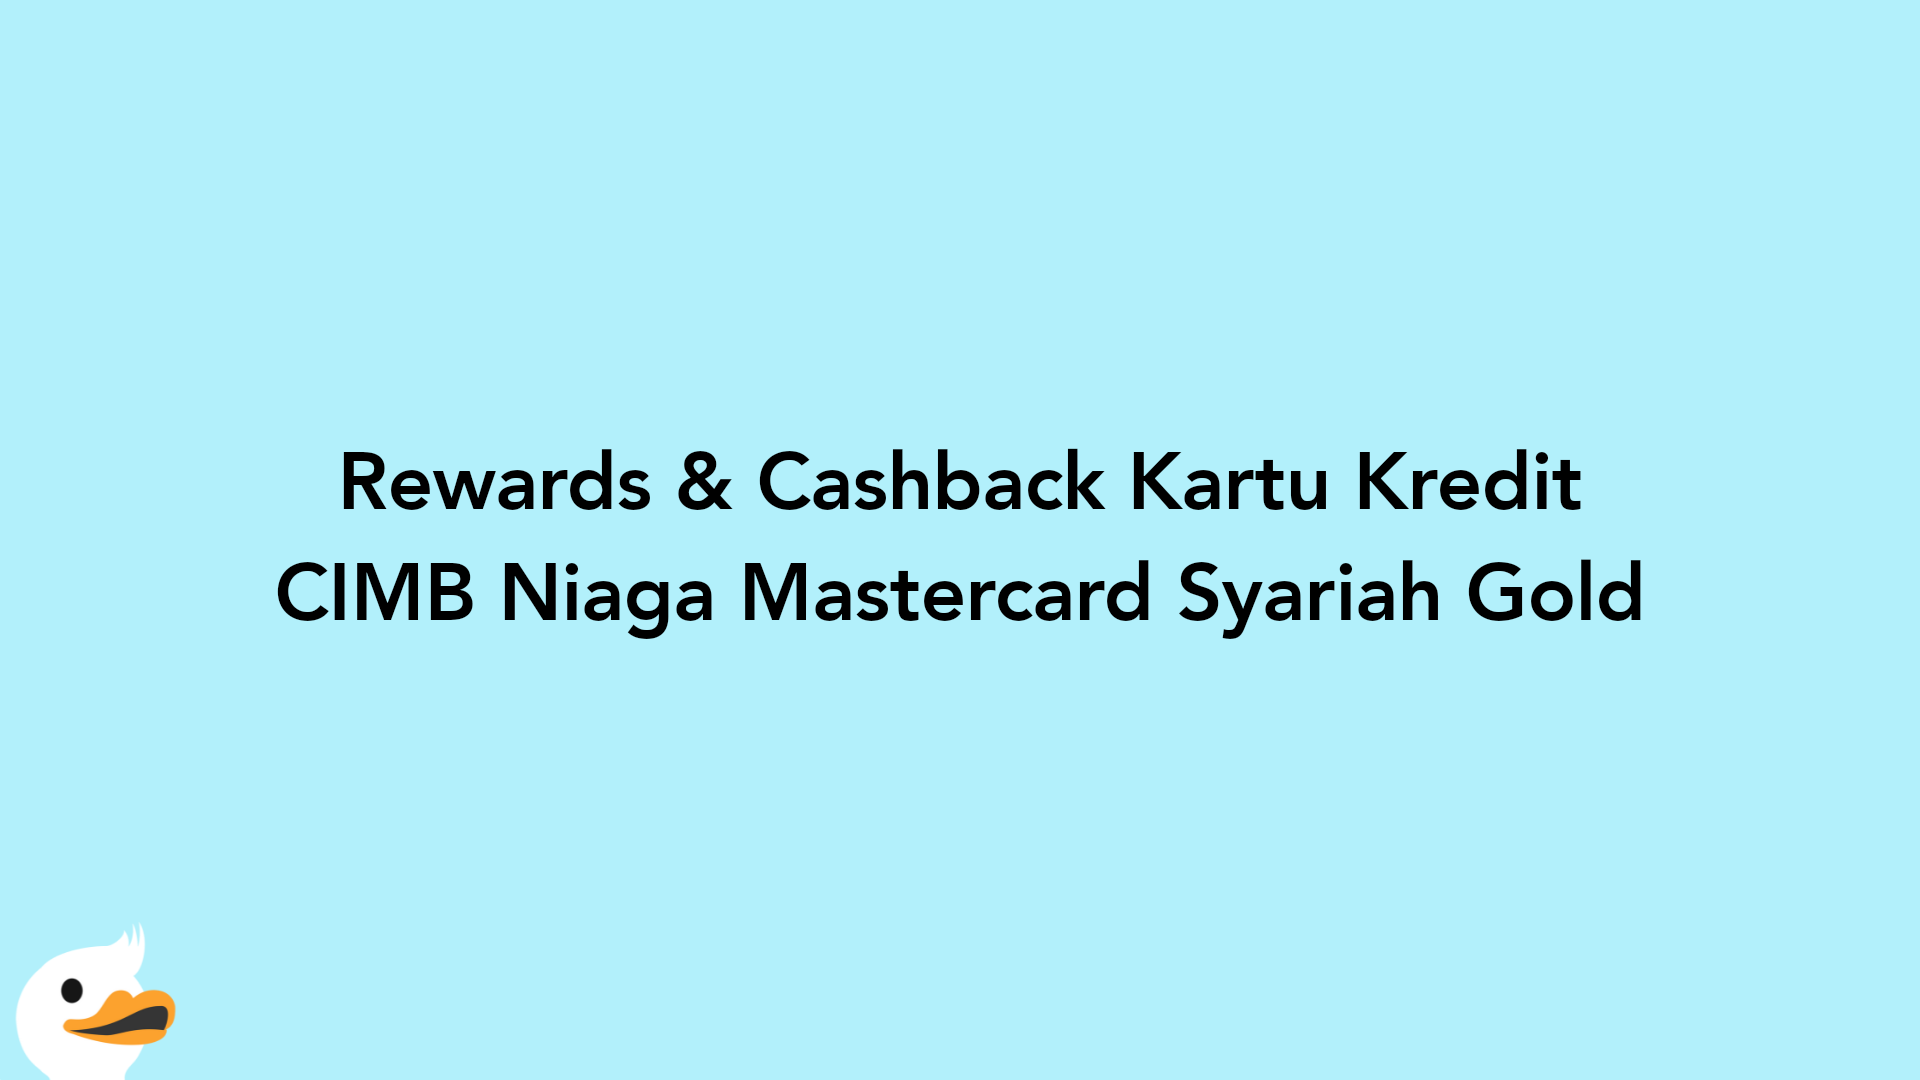 Rewards & Cashback Kartu Kredit CIMB Niaga Mastercard Syariah Gold